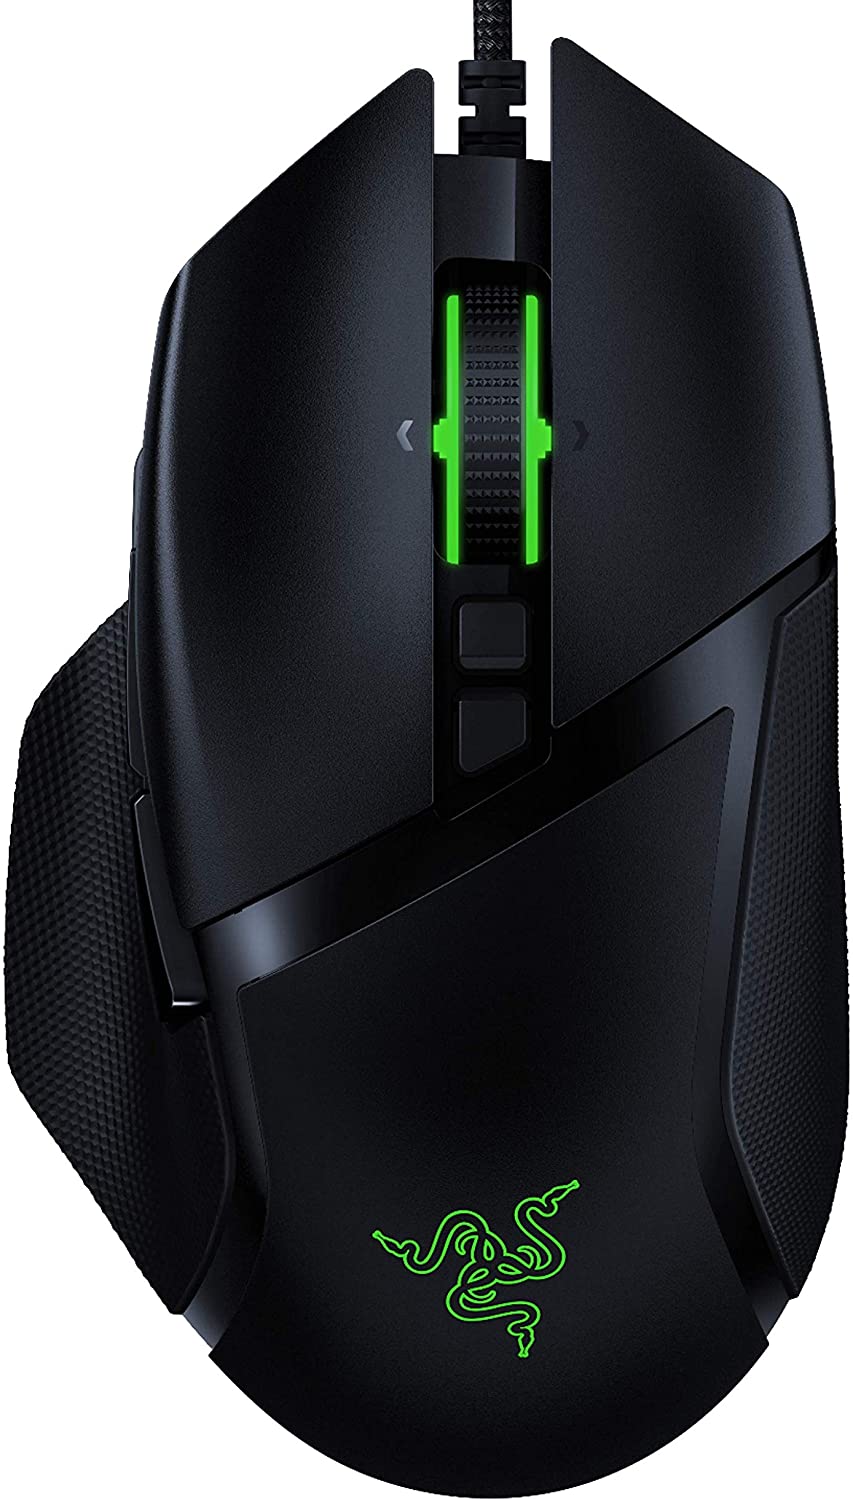 Razer Basilisk v2 Wired Gaming Mouse $29.99